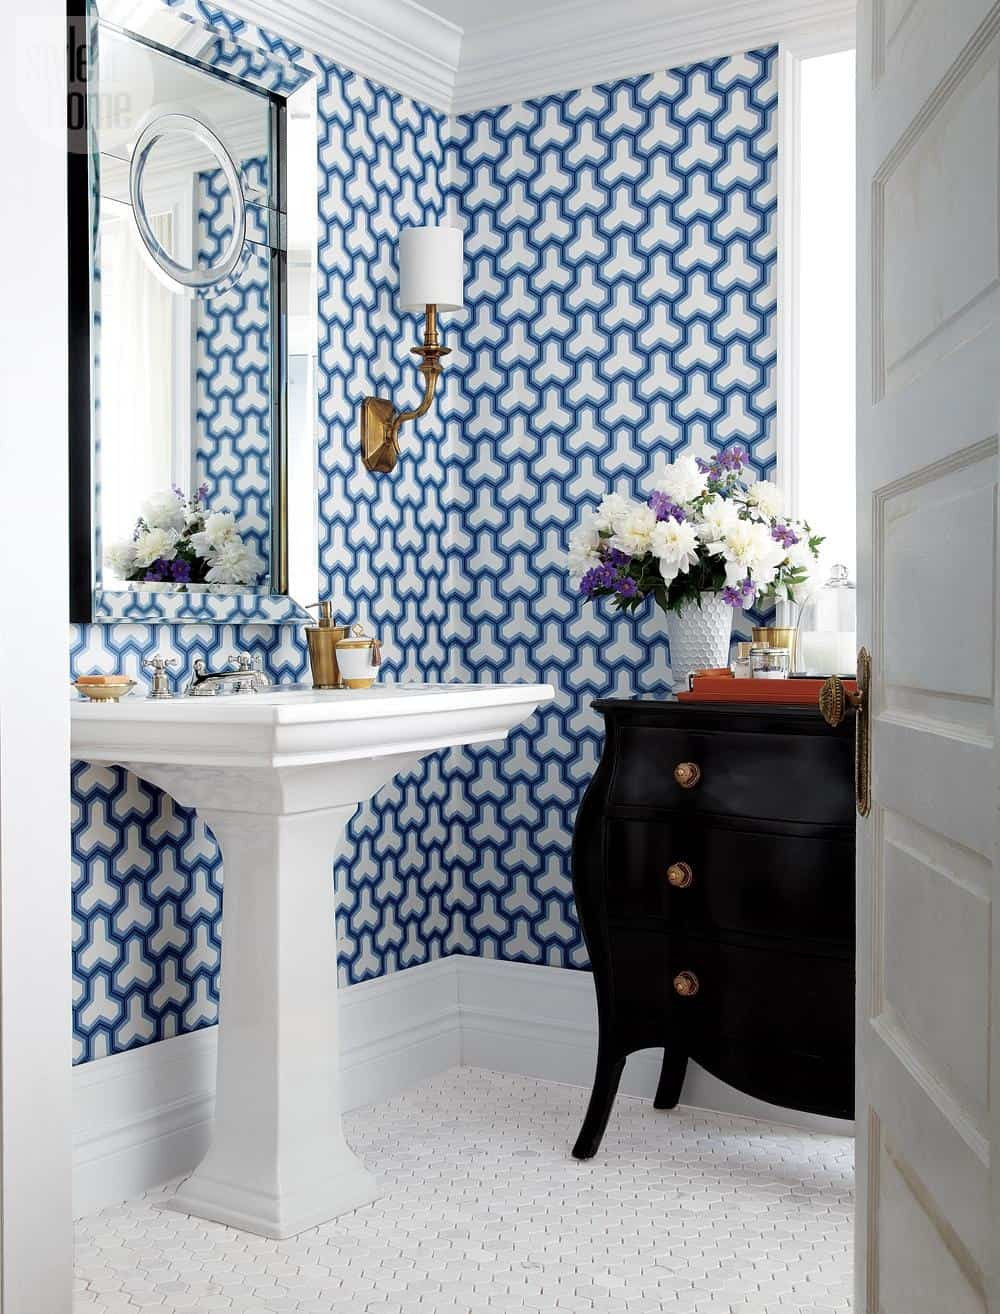 Bathroom Tile Wallpaper
 10 Modern Small Bathroom Ideas for Dramatic Design or